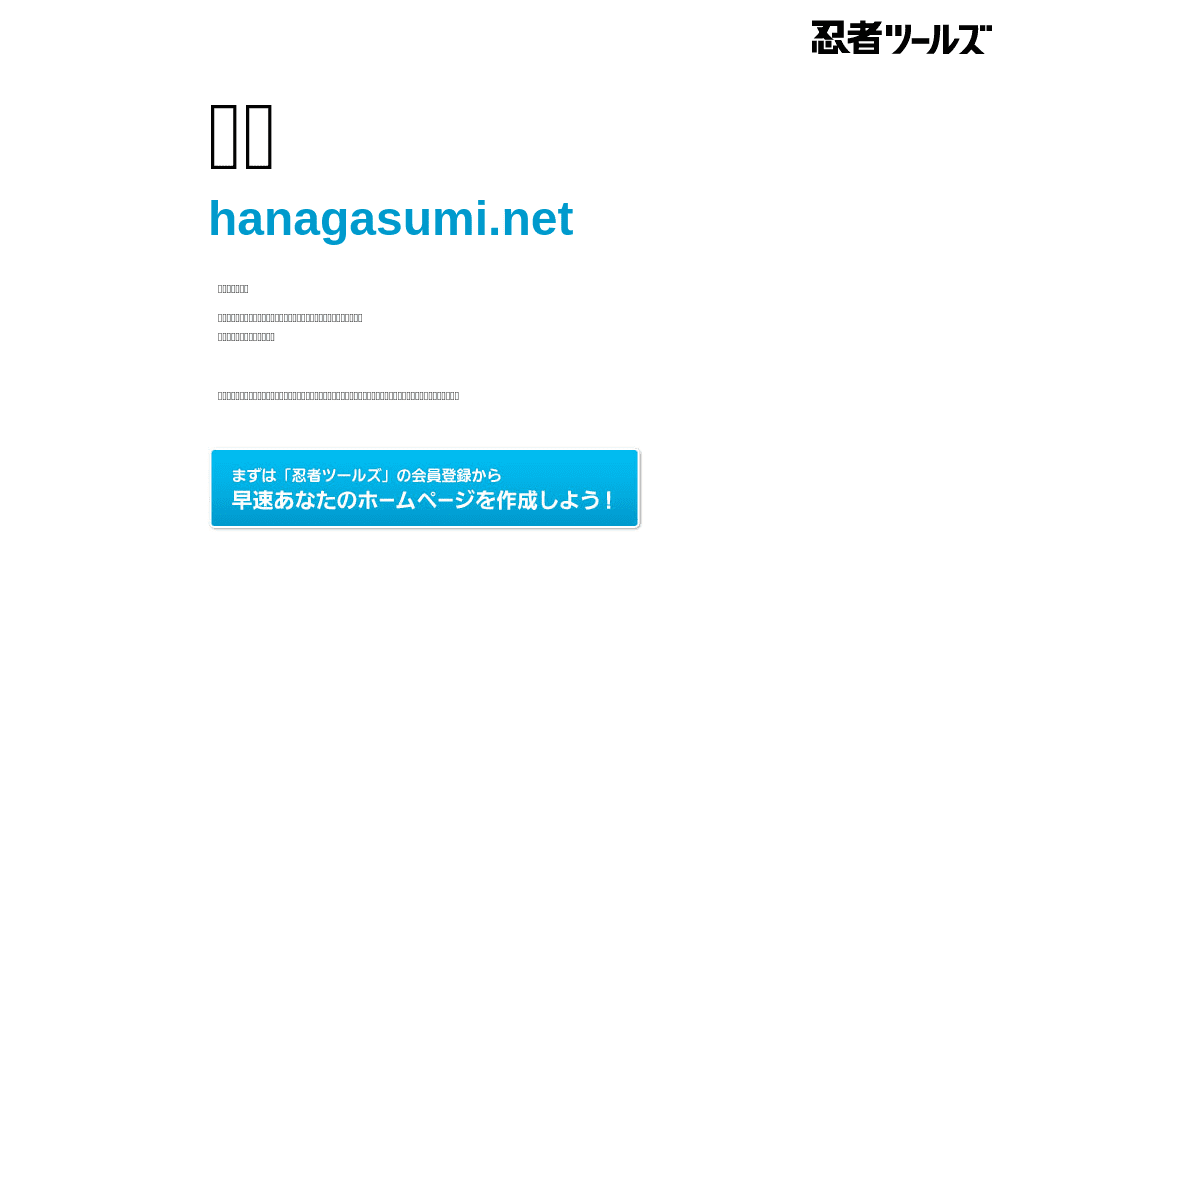 A complete backup of https://hanagasumi.net